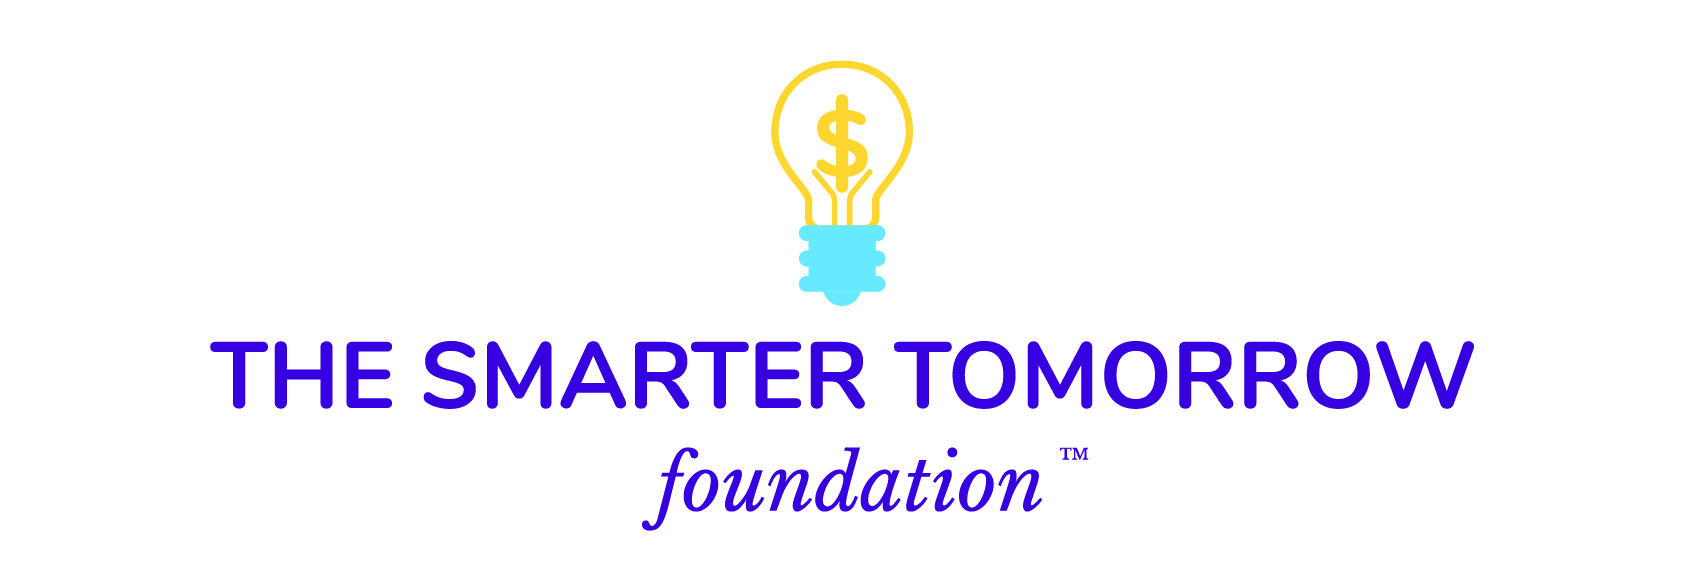 The Smarter Tomorrow Foundation